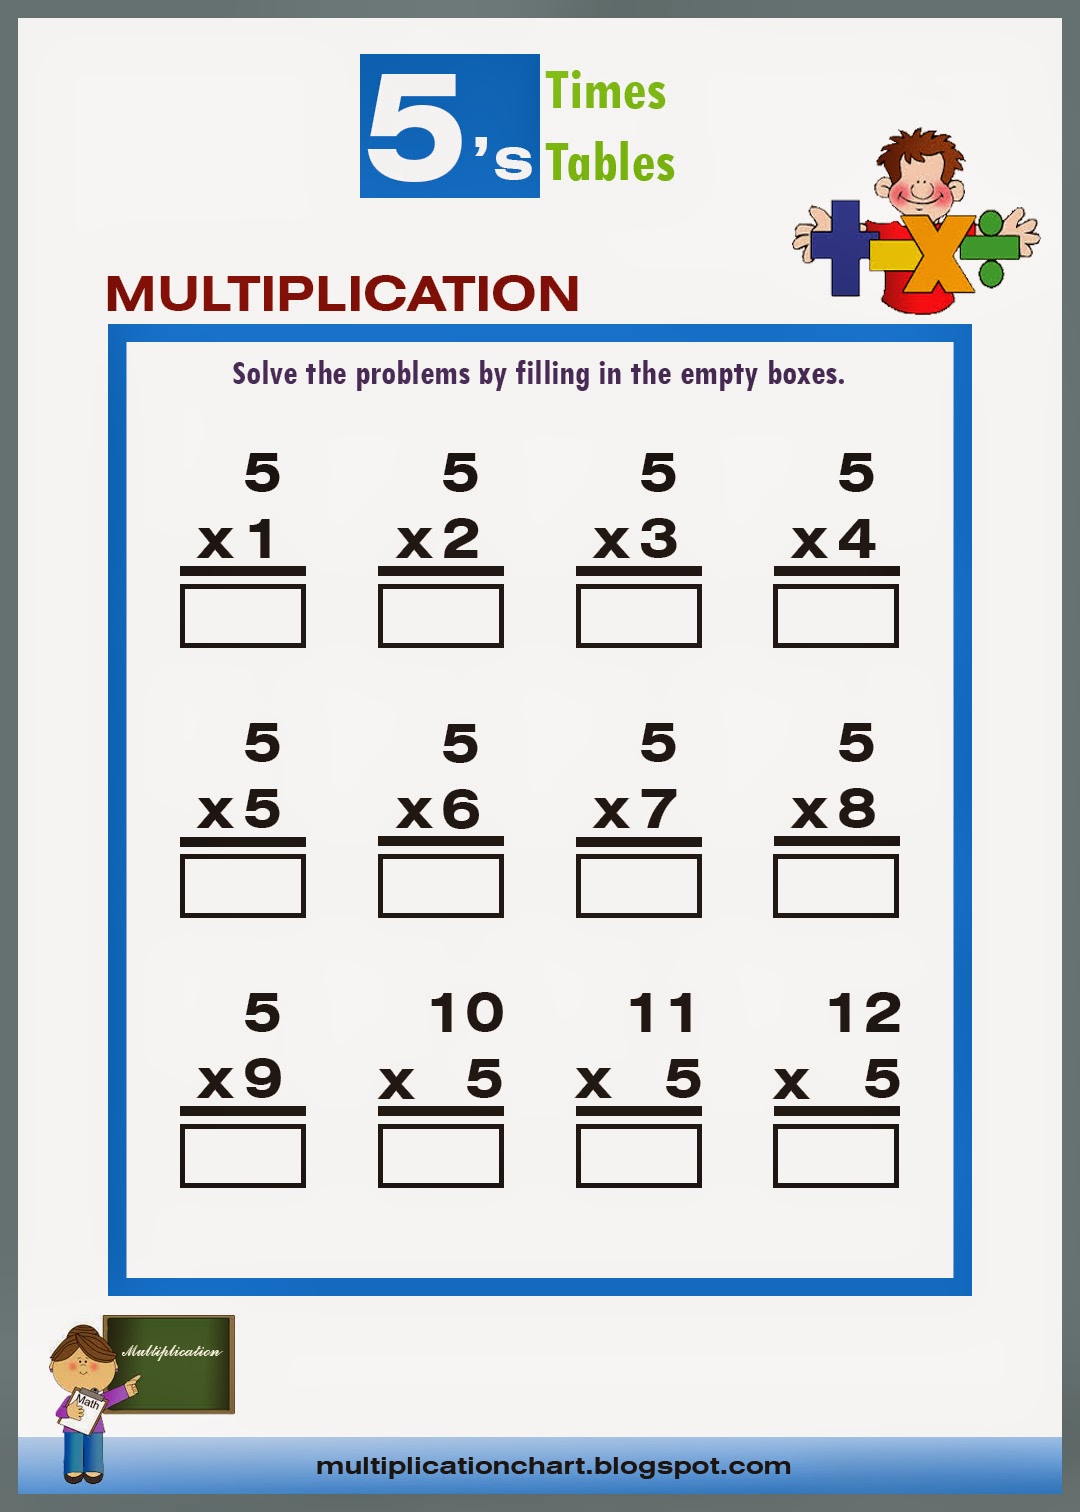 Multiplication Worksheets - 5 Times - MULTIPLICATION CHARTS